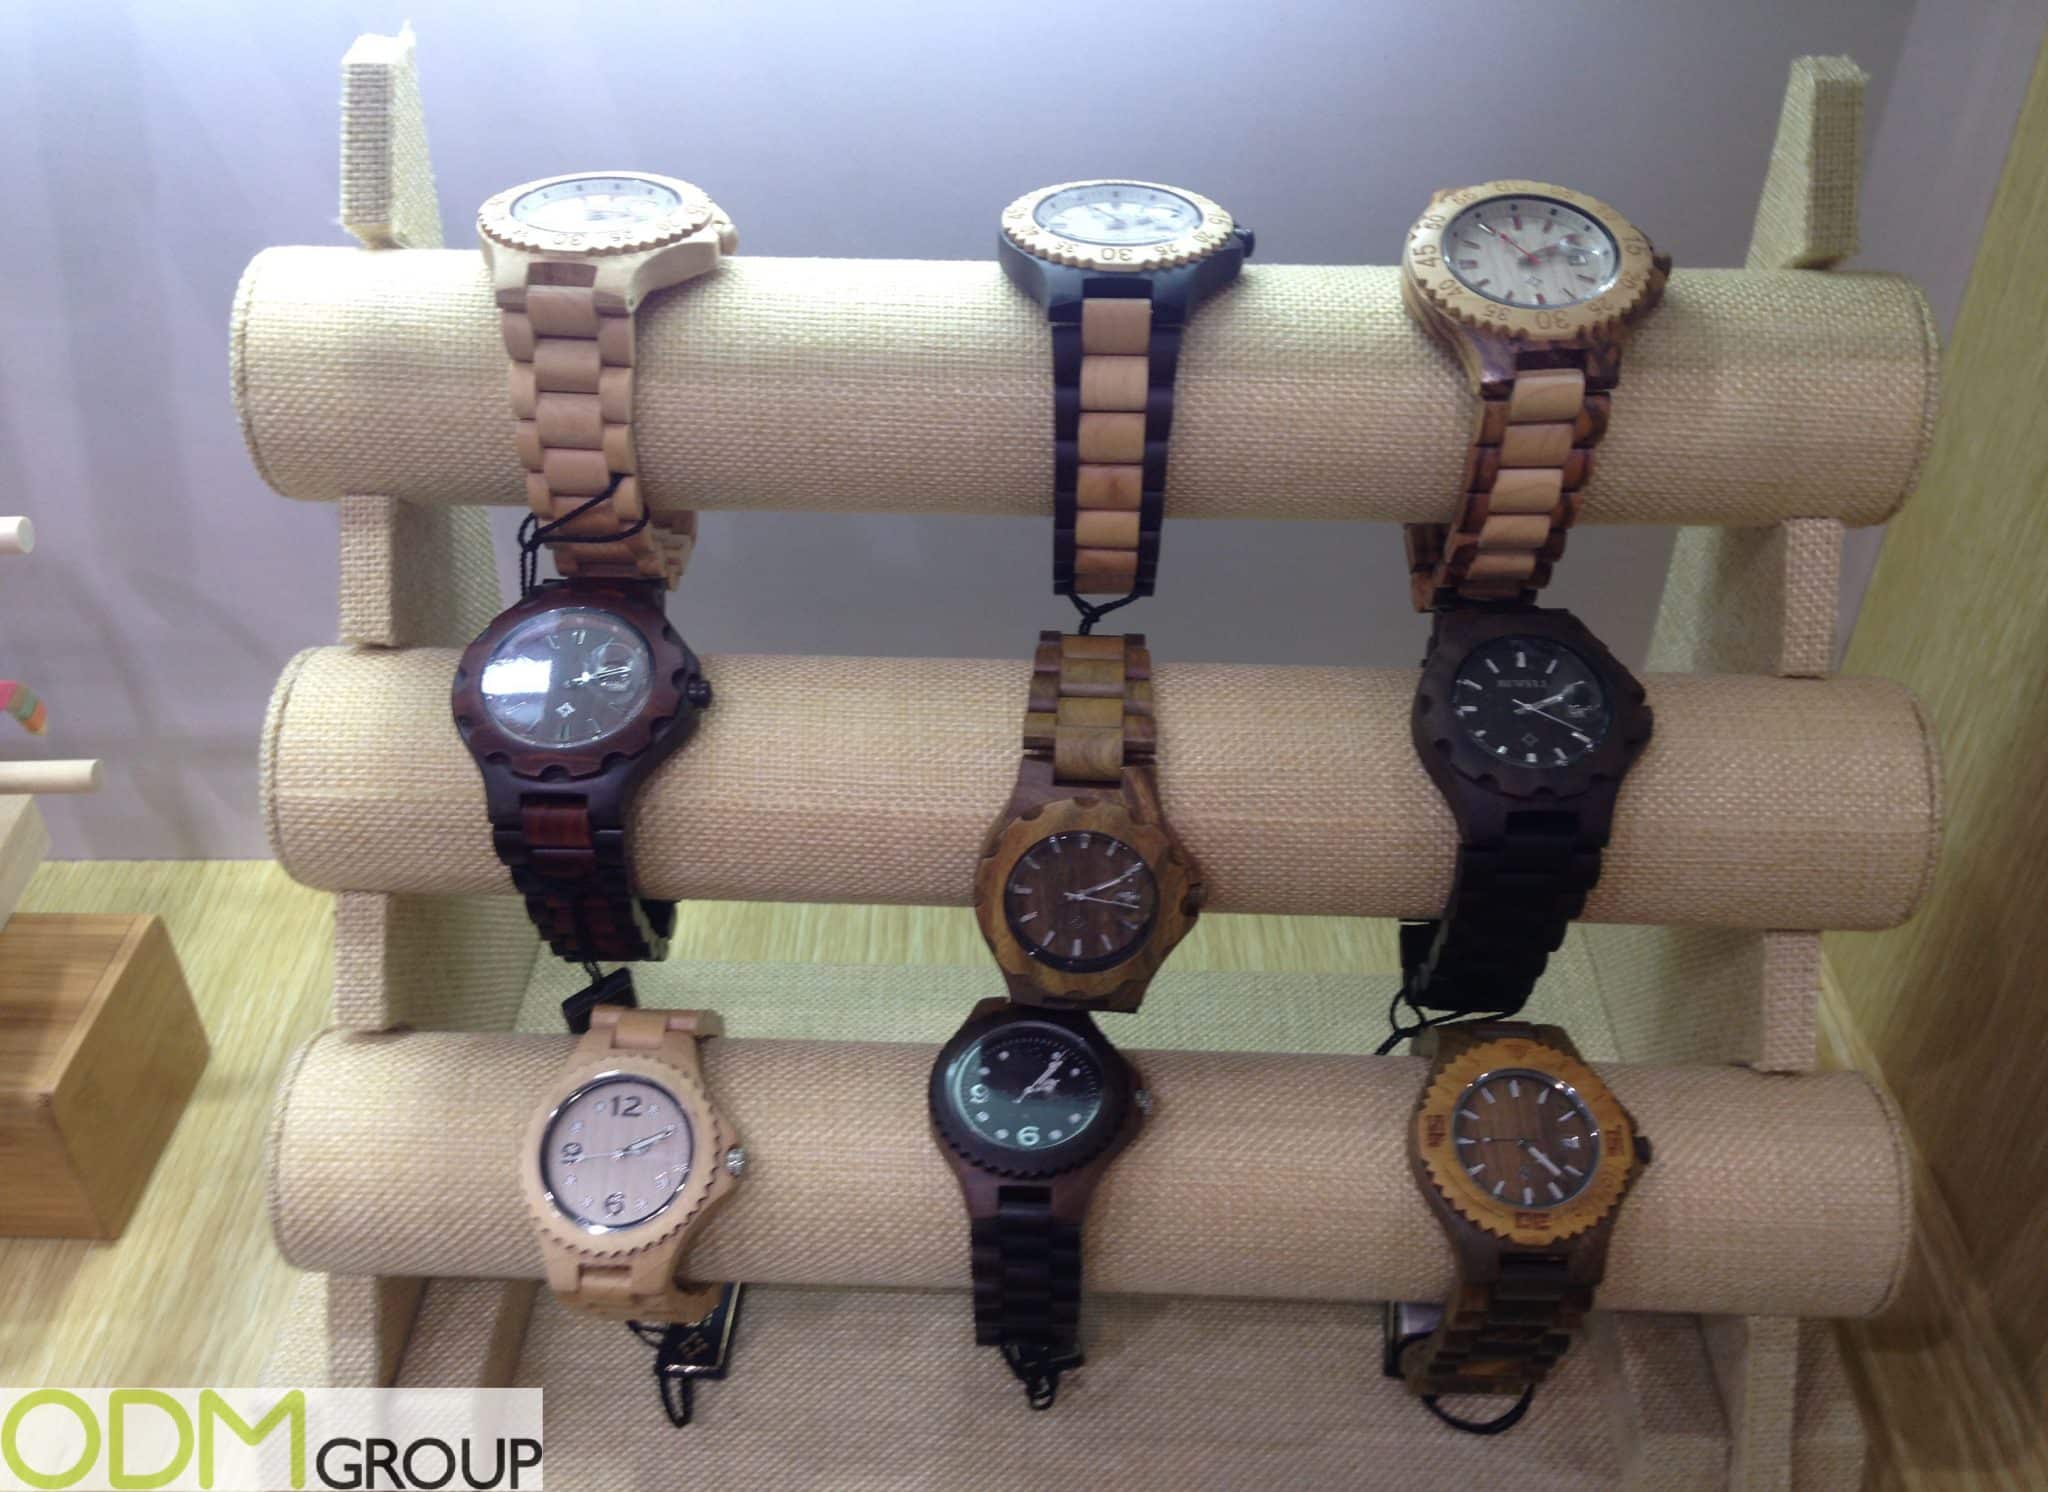 Promotional Bamboo Products - Stylish Wrist Watches